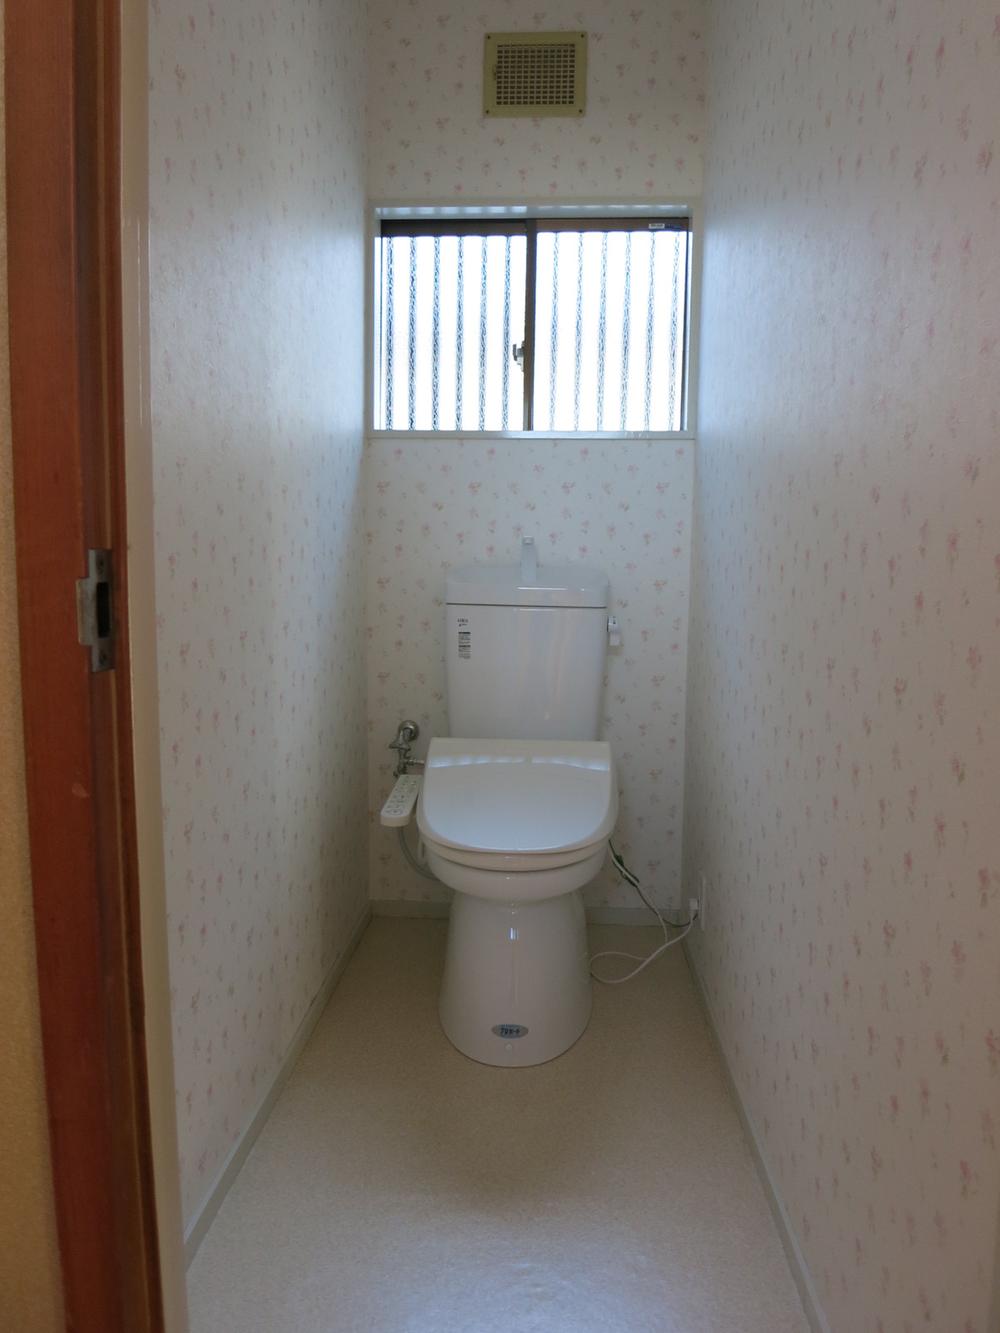 Toilet. Local (12 May 2013) Shooting